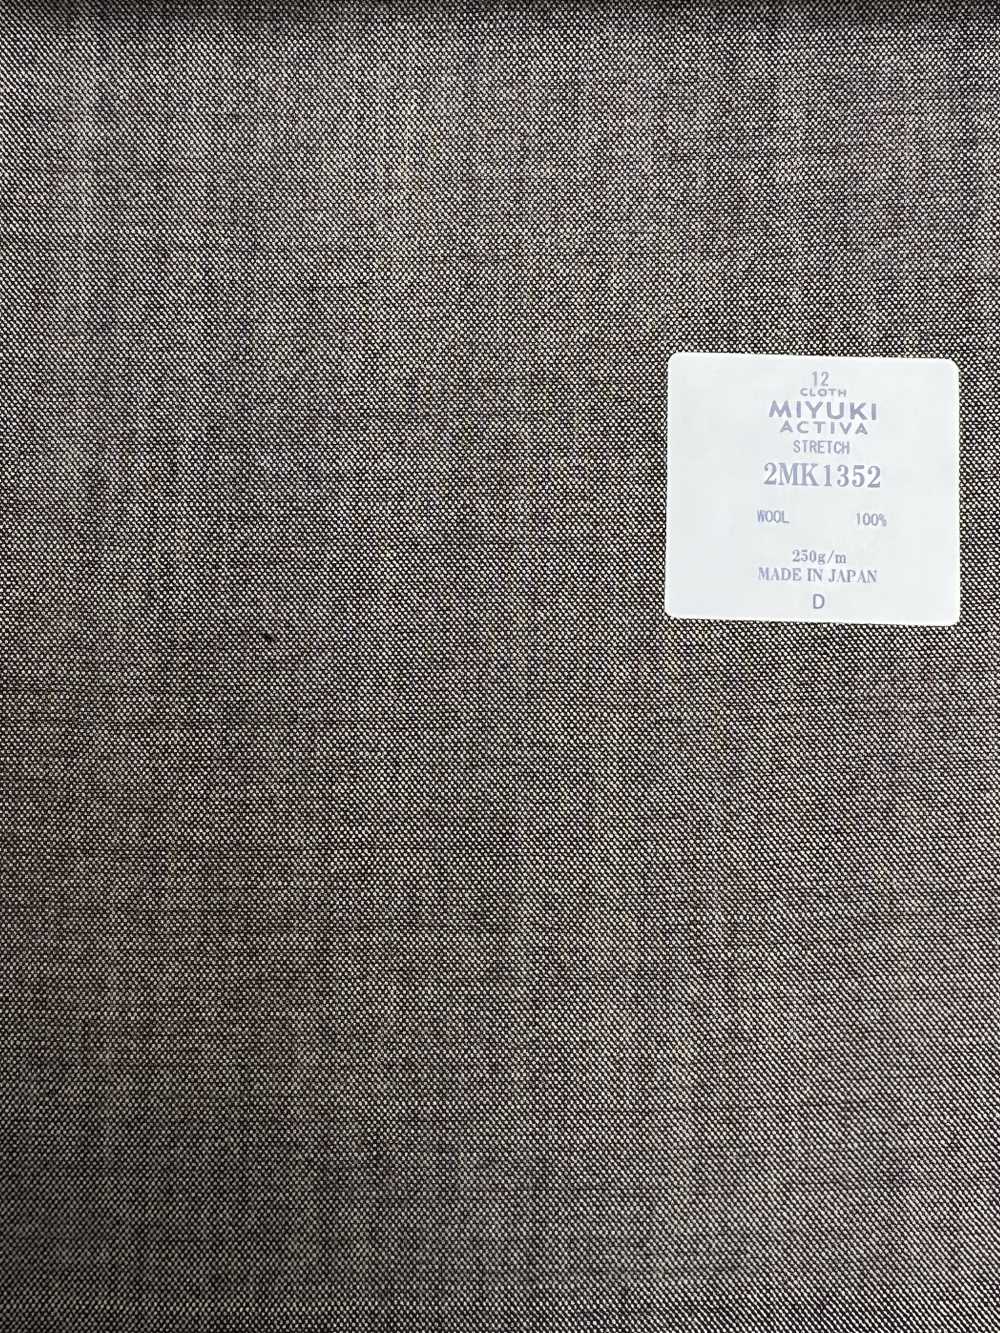 2MK1352 MIYUKI COMFORT ACTIVA STRETCH Marrón Claro[Textil] Miyuki Keori (Miyuki)